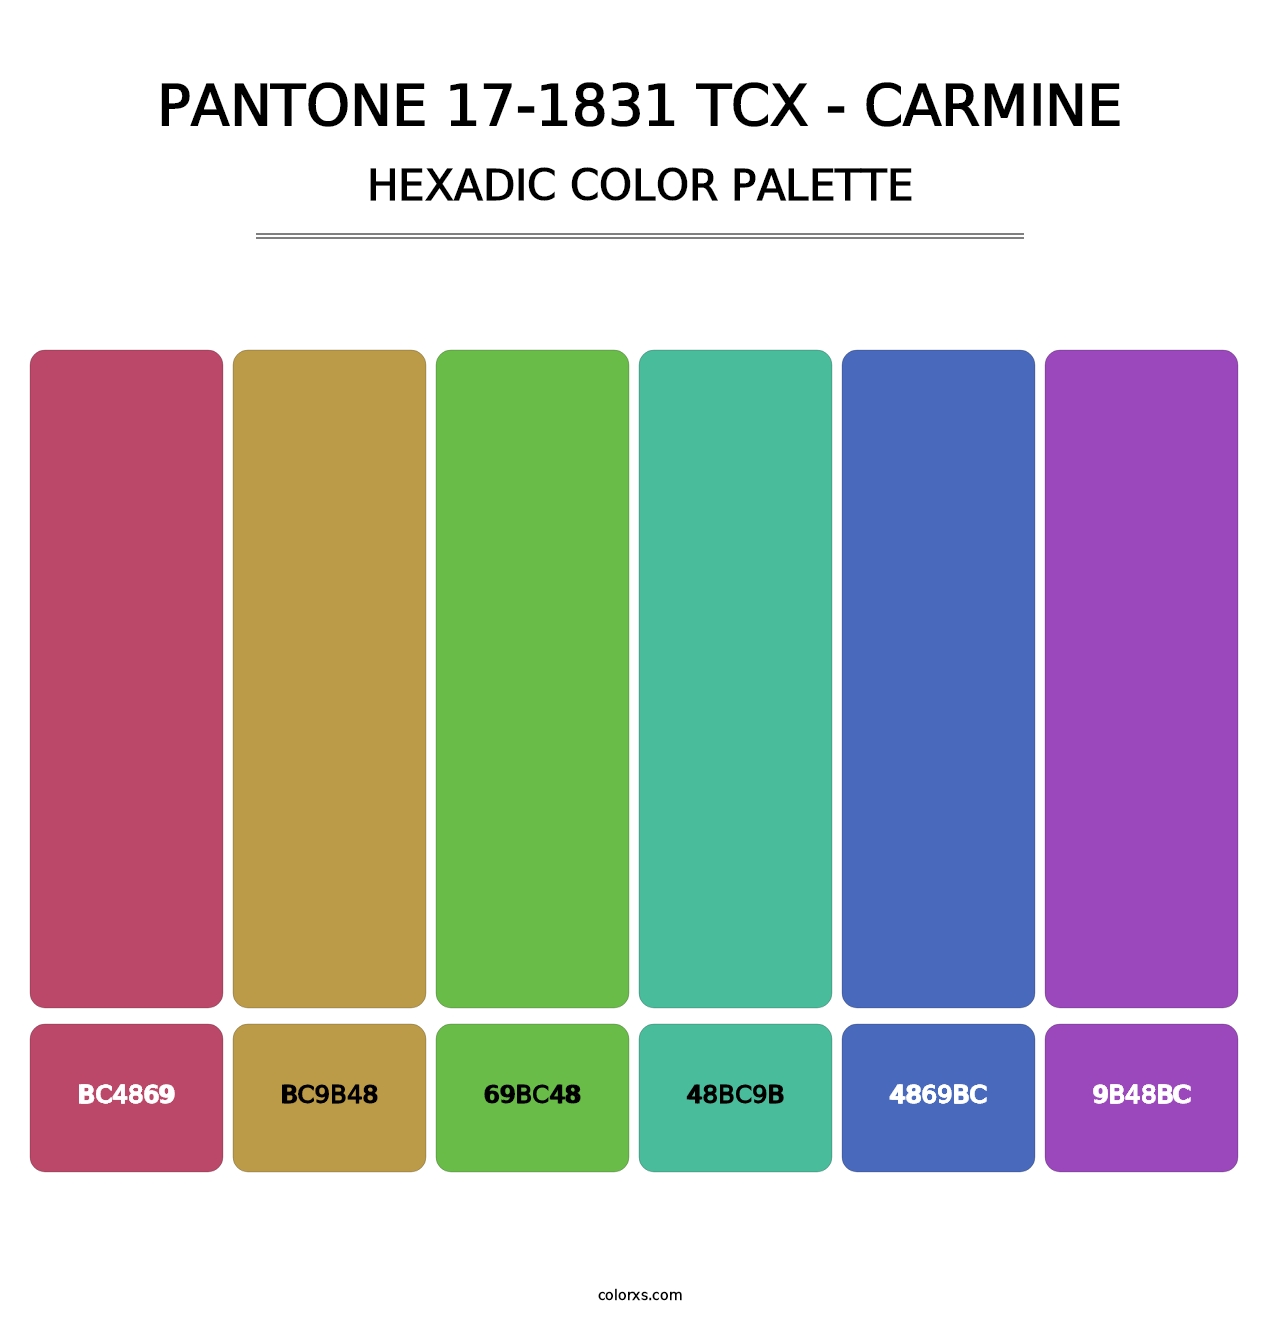 PANTONE 17-1831 TCX - Carmine - Hexadic Color Palette